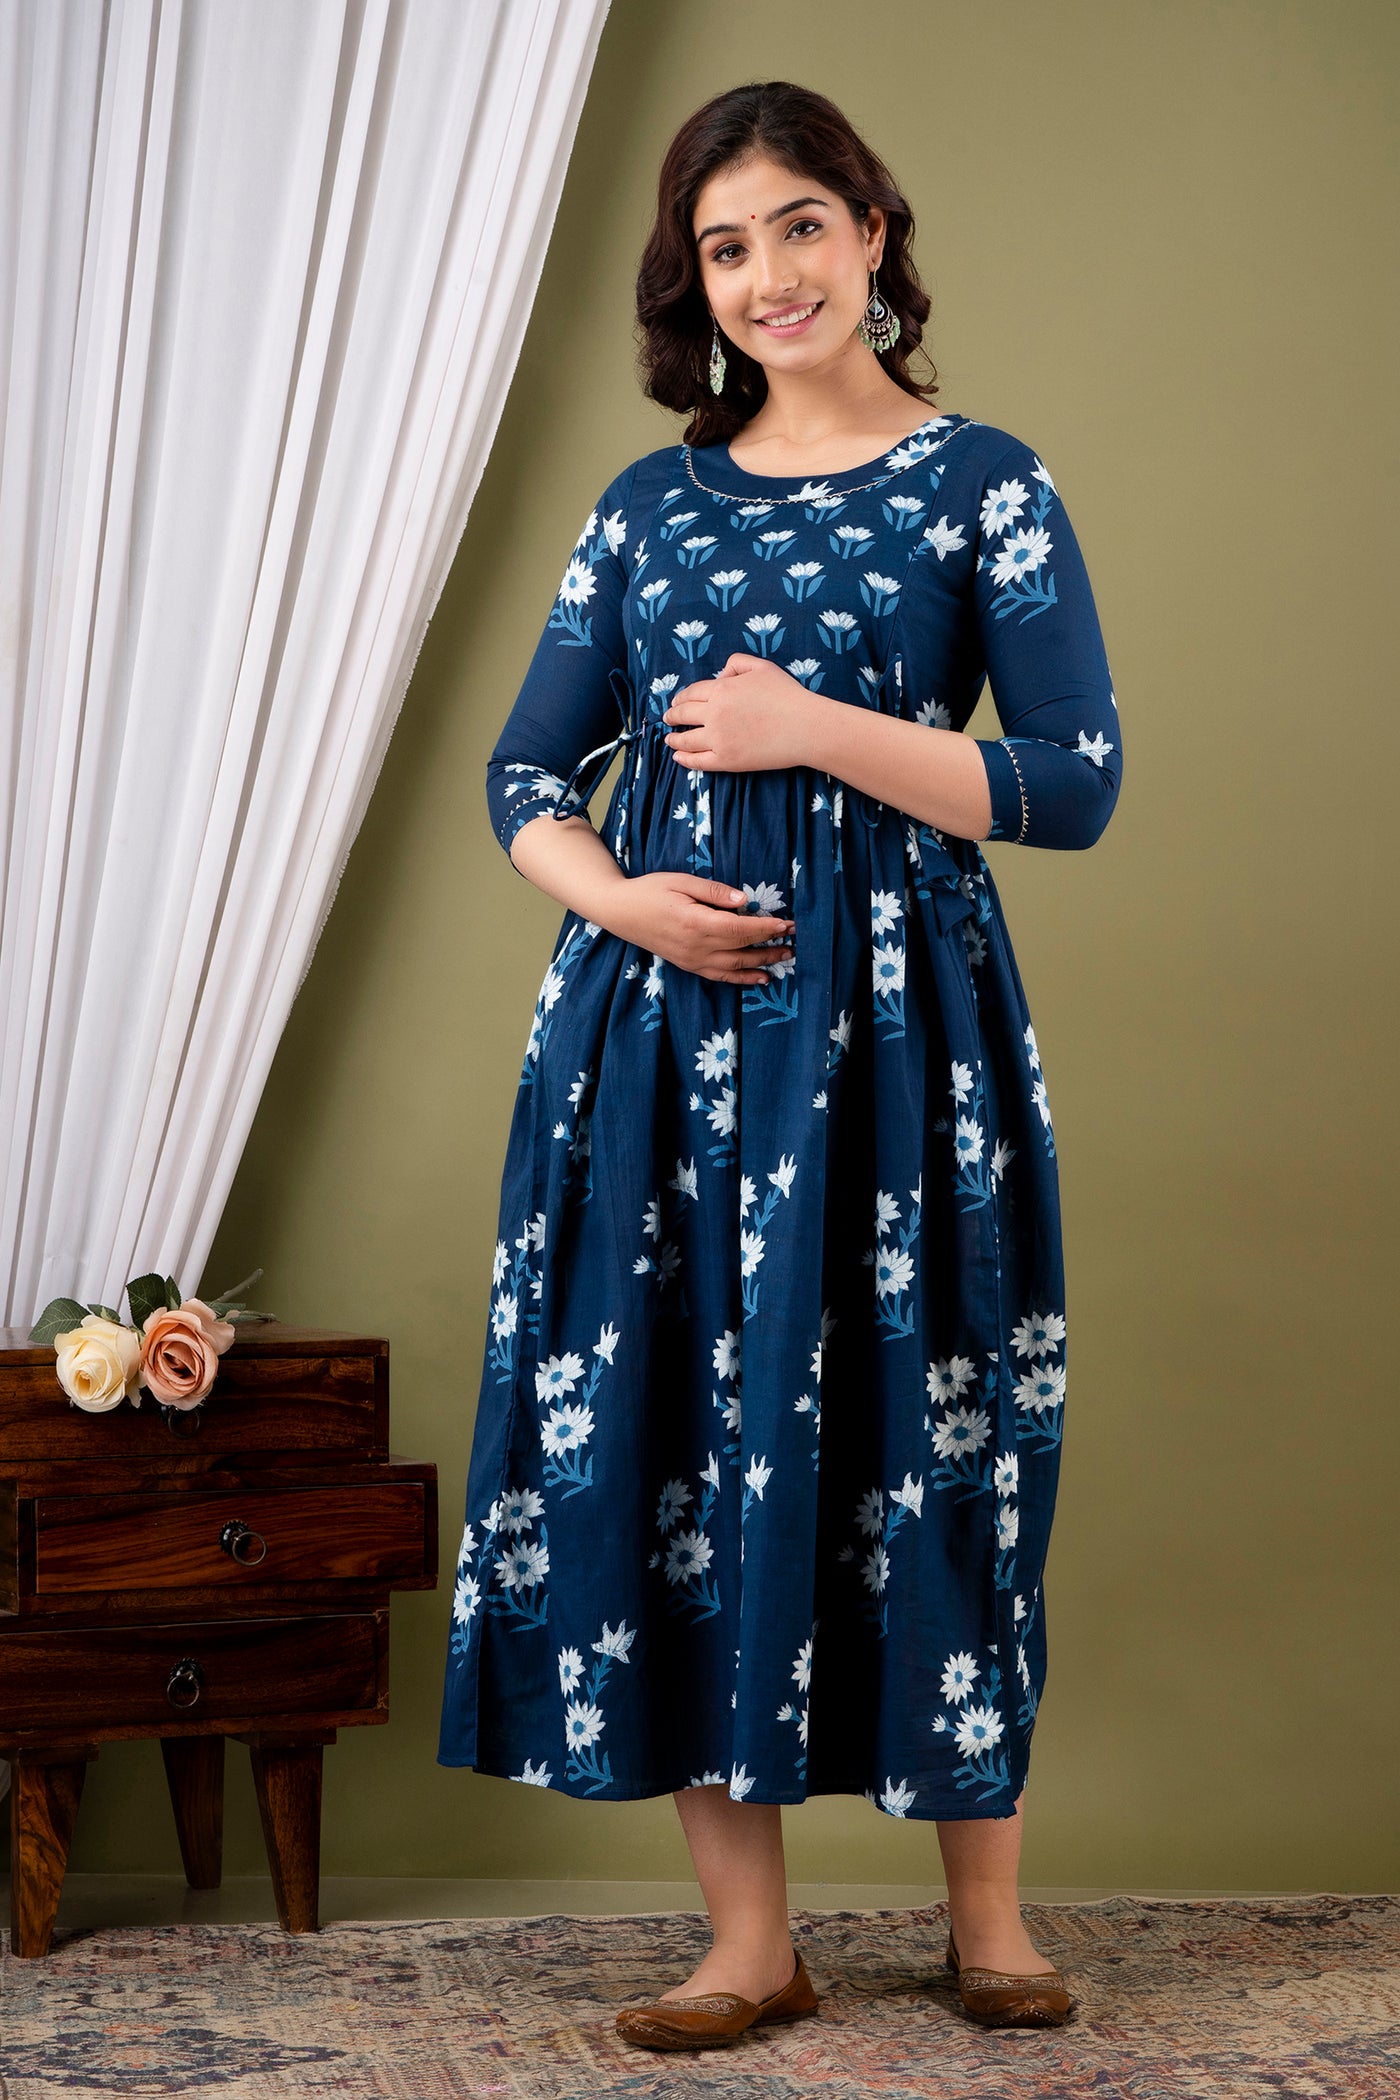 Dark Blue and White Flower Print Maternity Nursing Gown with Feeding Zip